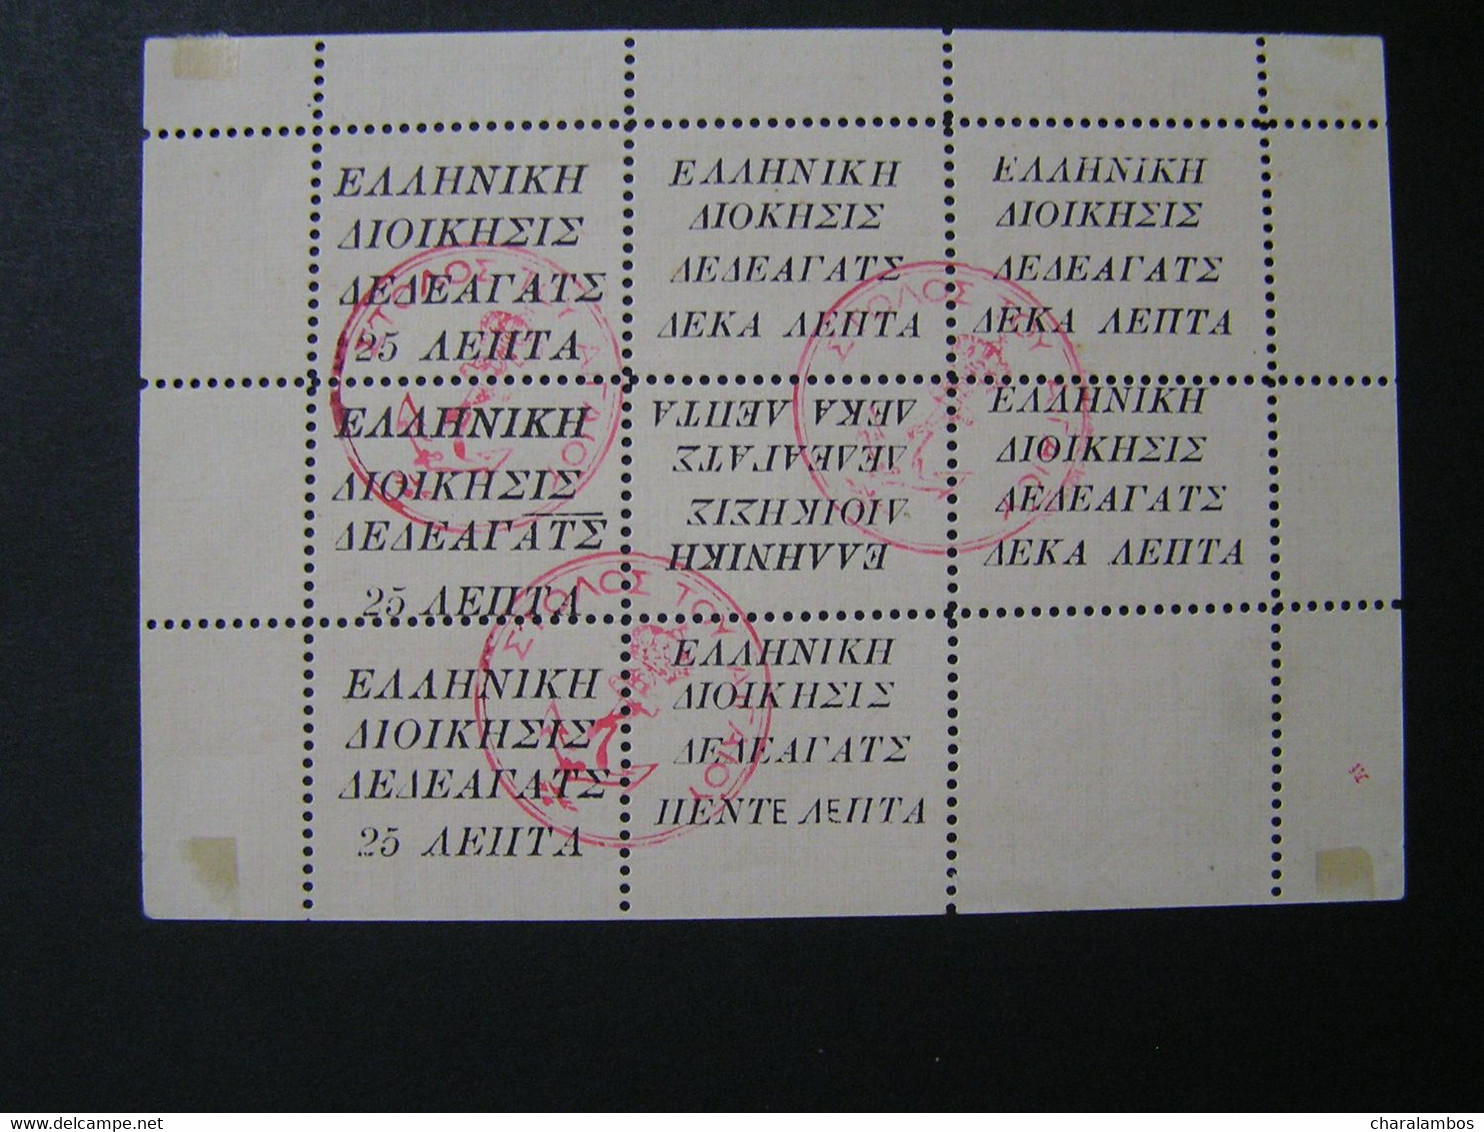 GREECE-Dedeagatch 1st Label Issue SHEETLET F6 San Gom Sheetlets Or Stamps Of Wat.. - Dedeagh (Dedeagatch)